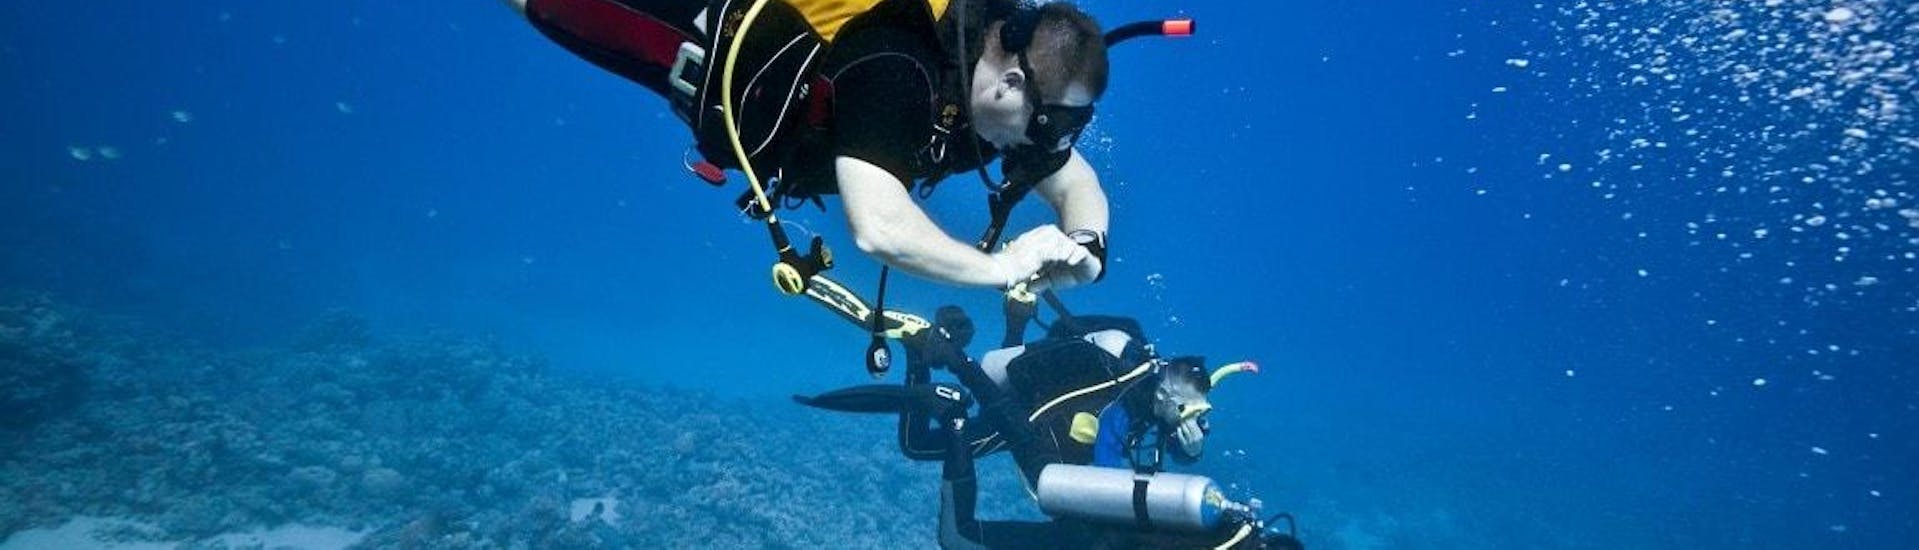 NAUI Passport Diver Course in Novalja for Beginners with Foka Diving Centar Novalja - Hero image